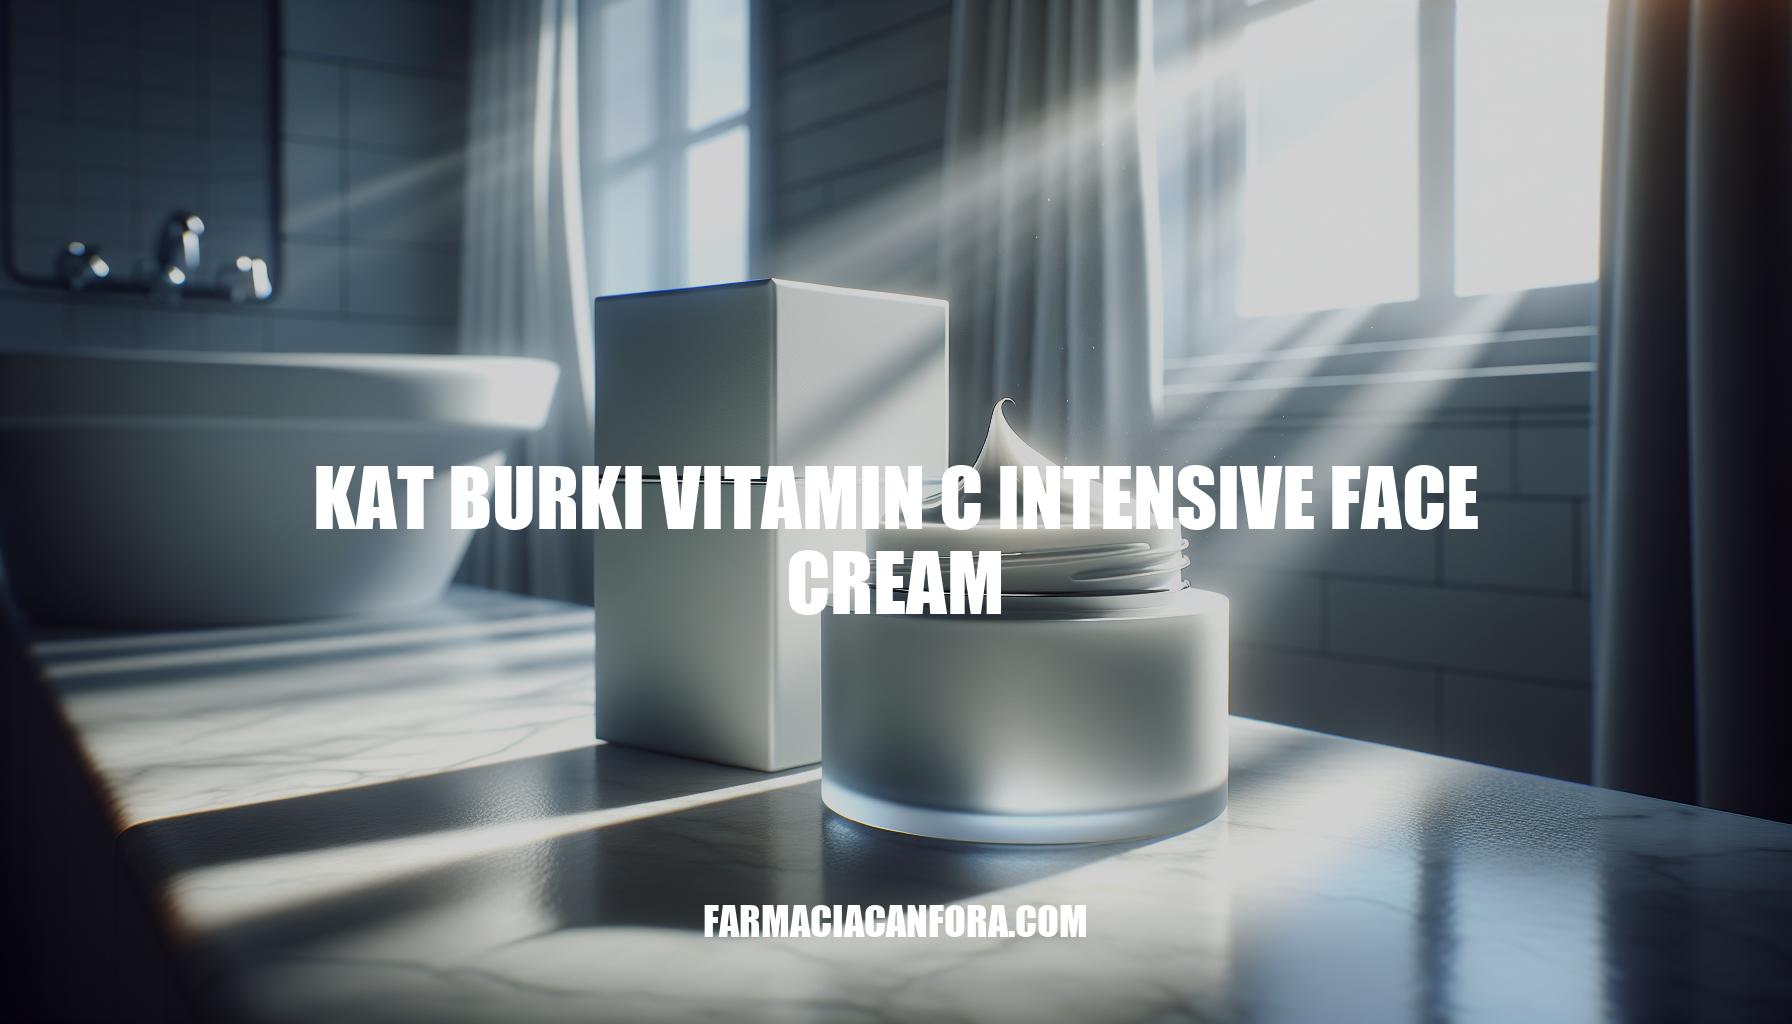 Kat Burki Vitamin C Intensive Face Cream: Revitalize Your Skin with Powerful Antioxidants